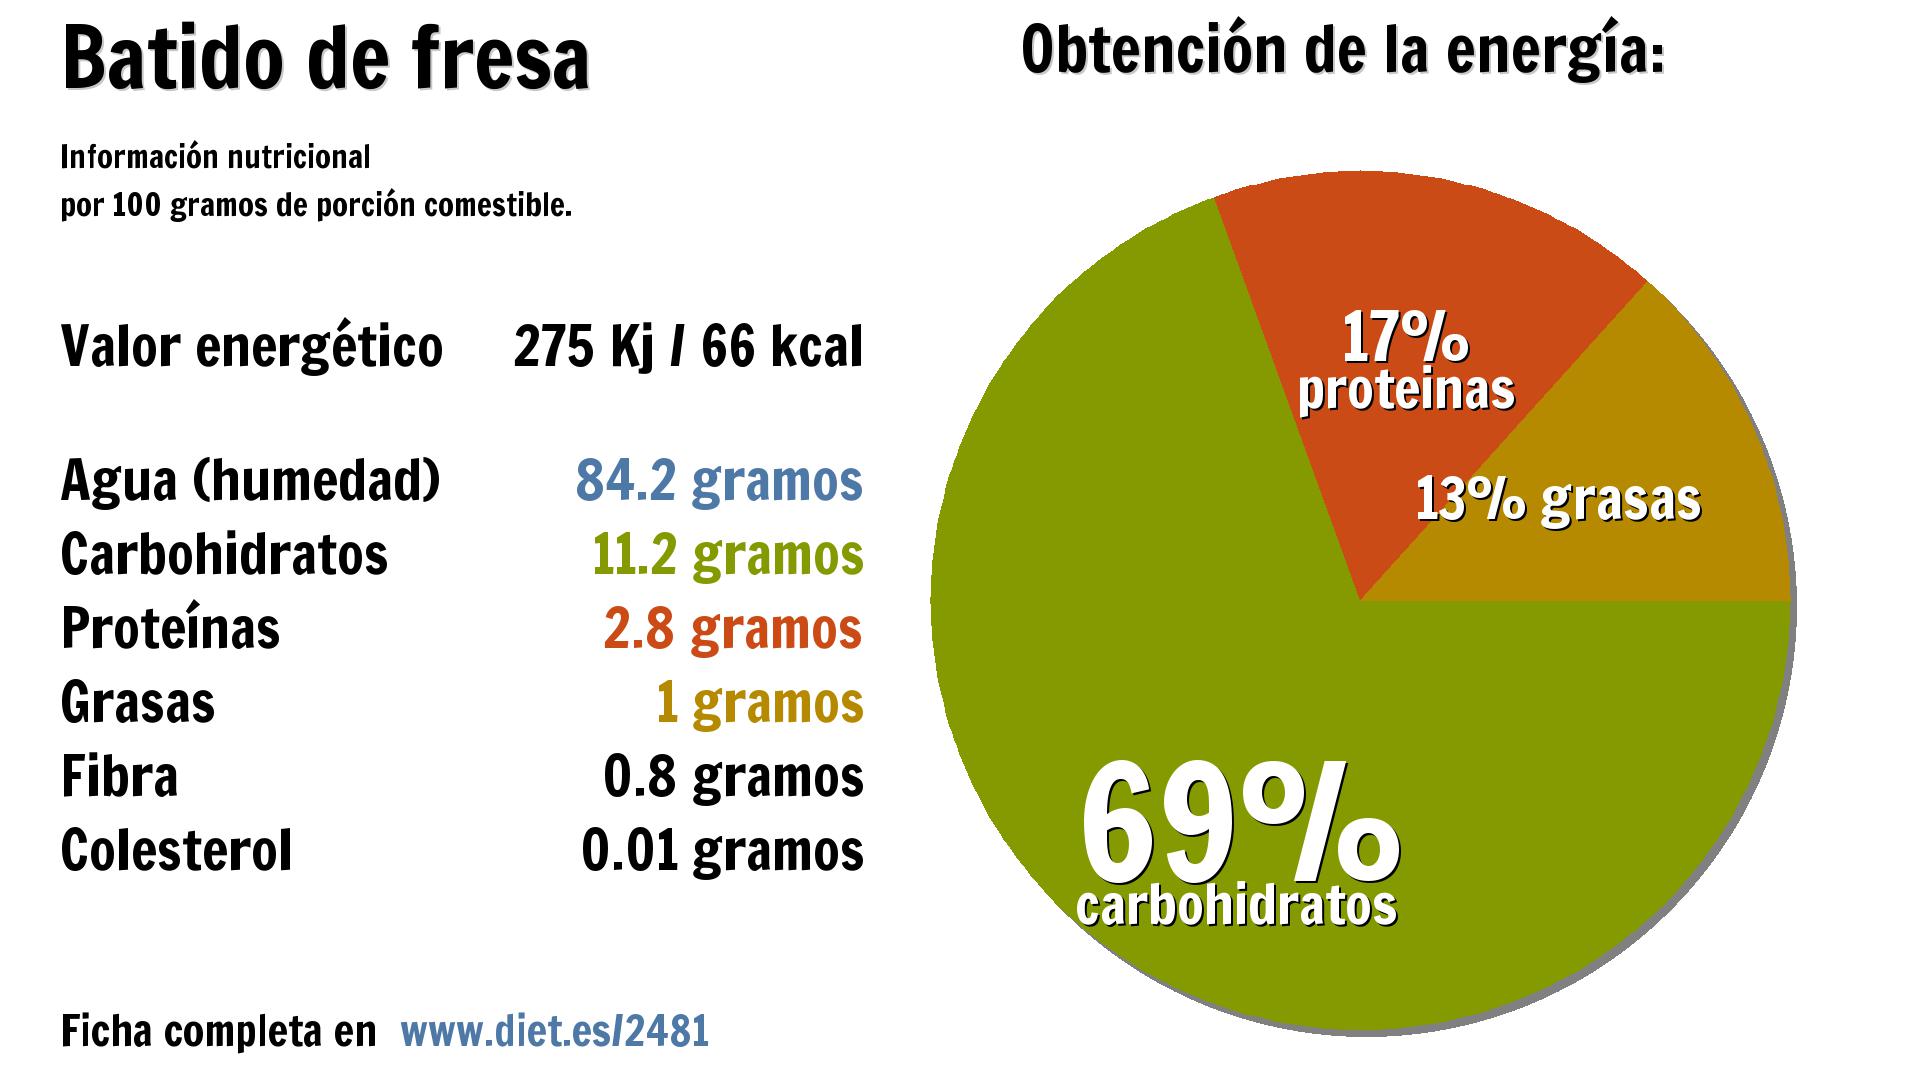 Batido de fresa: energía 275 Kj, agua 84 g., carbohidratos 11 g., proteínas 3 g., grasas 1 g. y fibra 1 g.